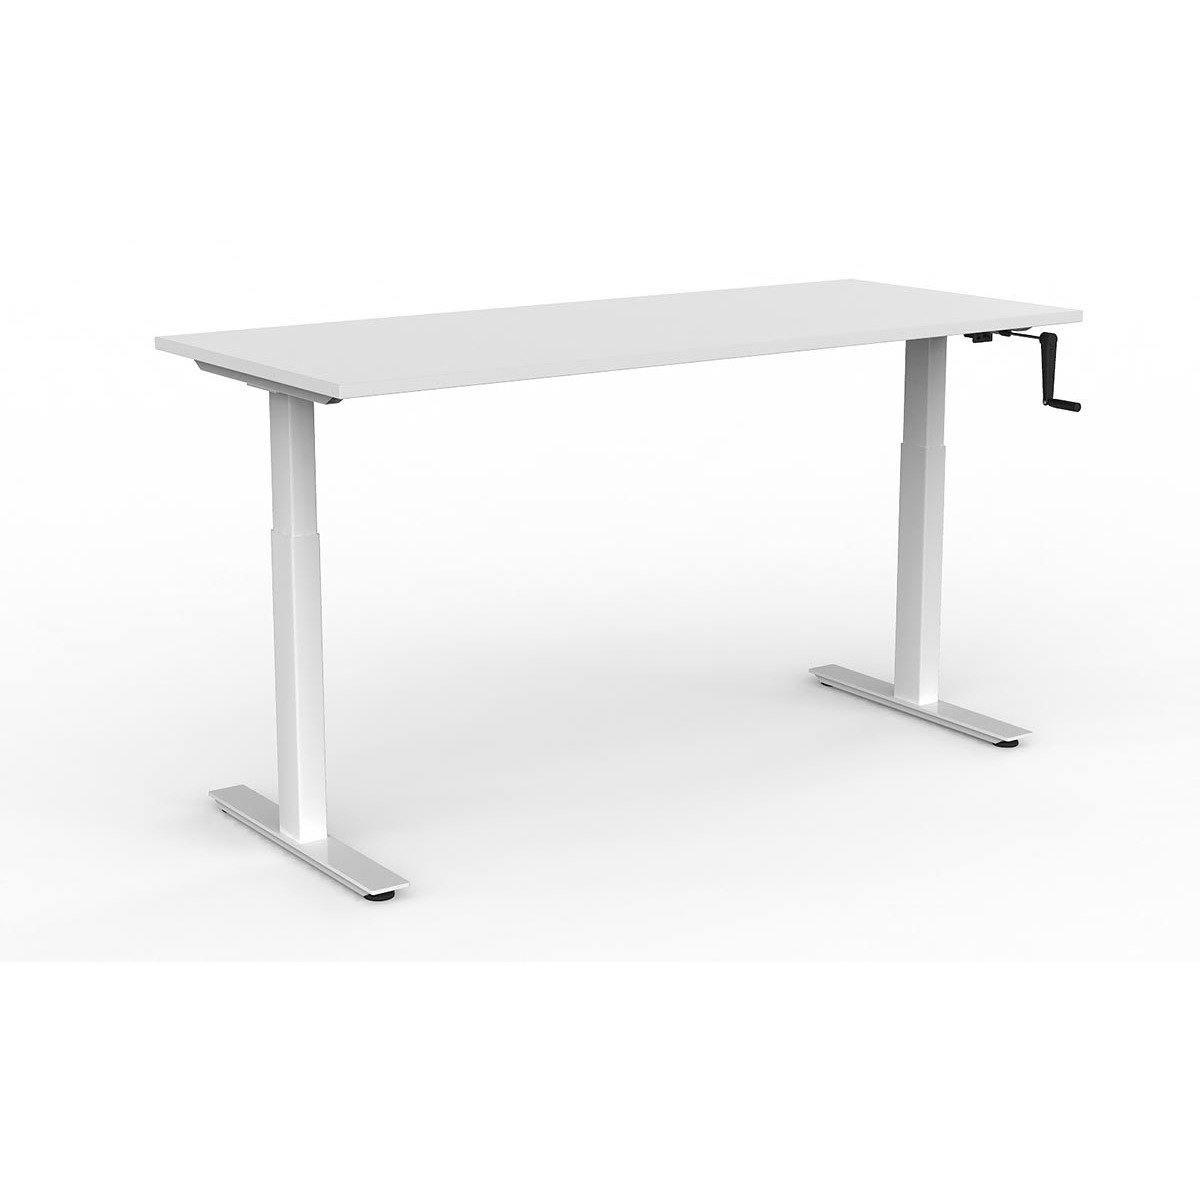 Agile Winder Height Adjustable Desk - Office Furniture Company 